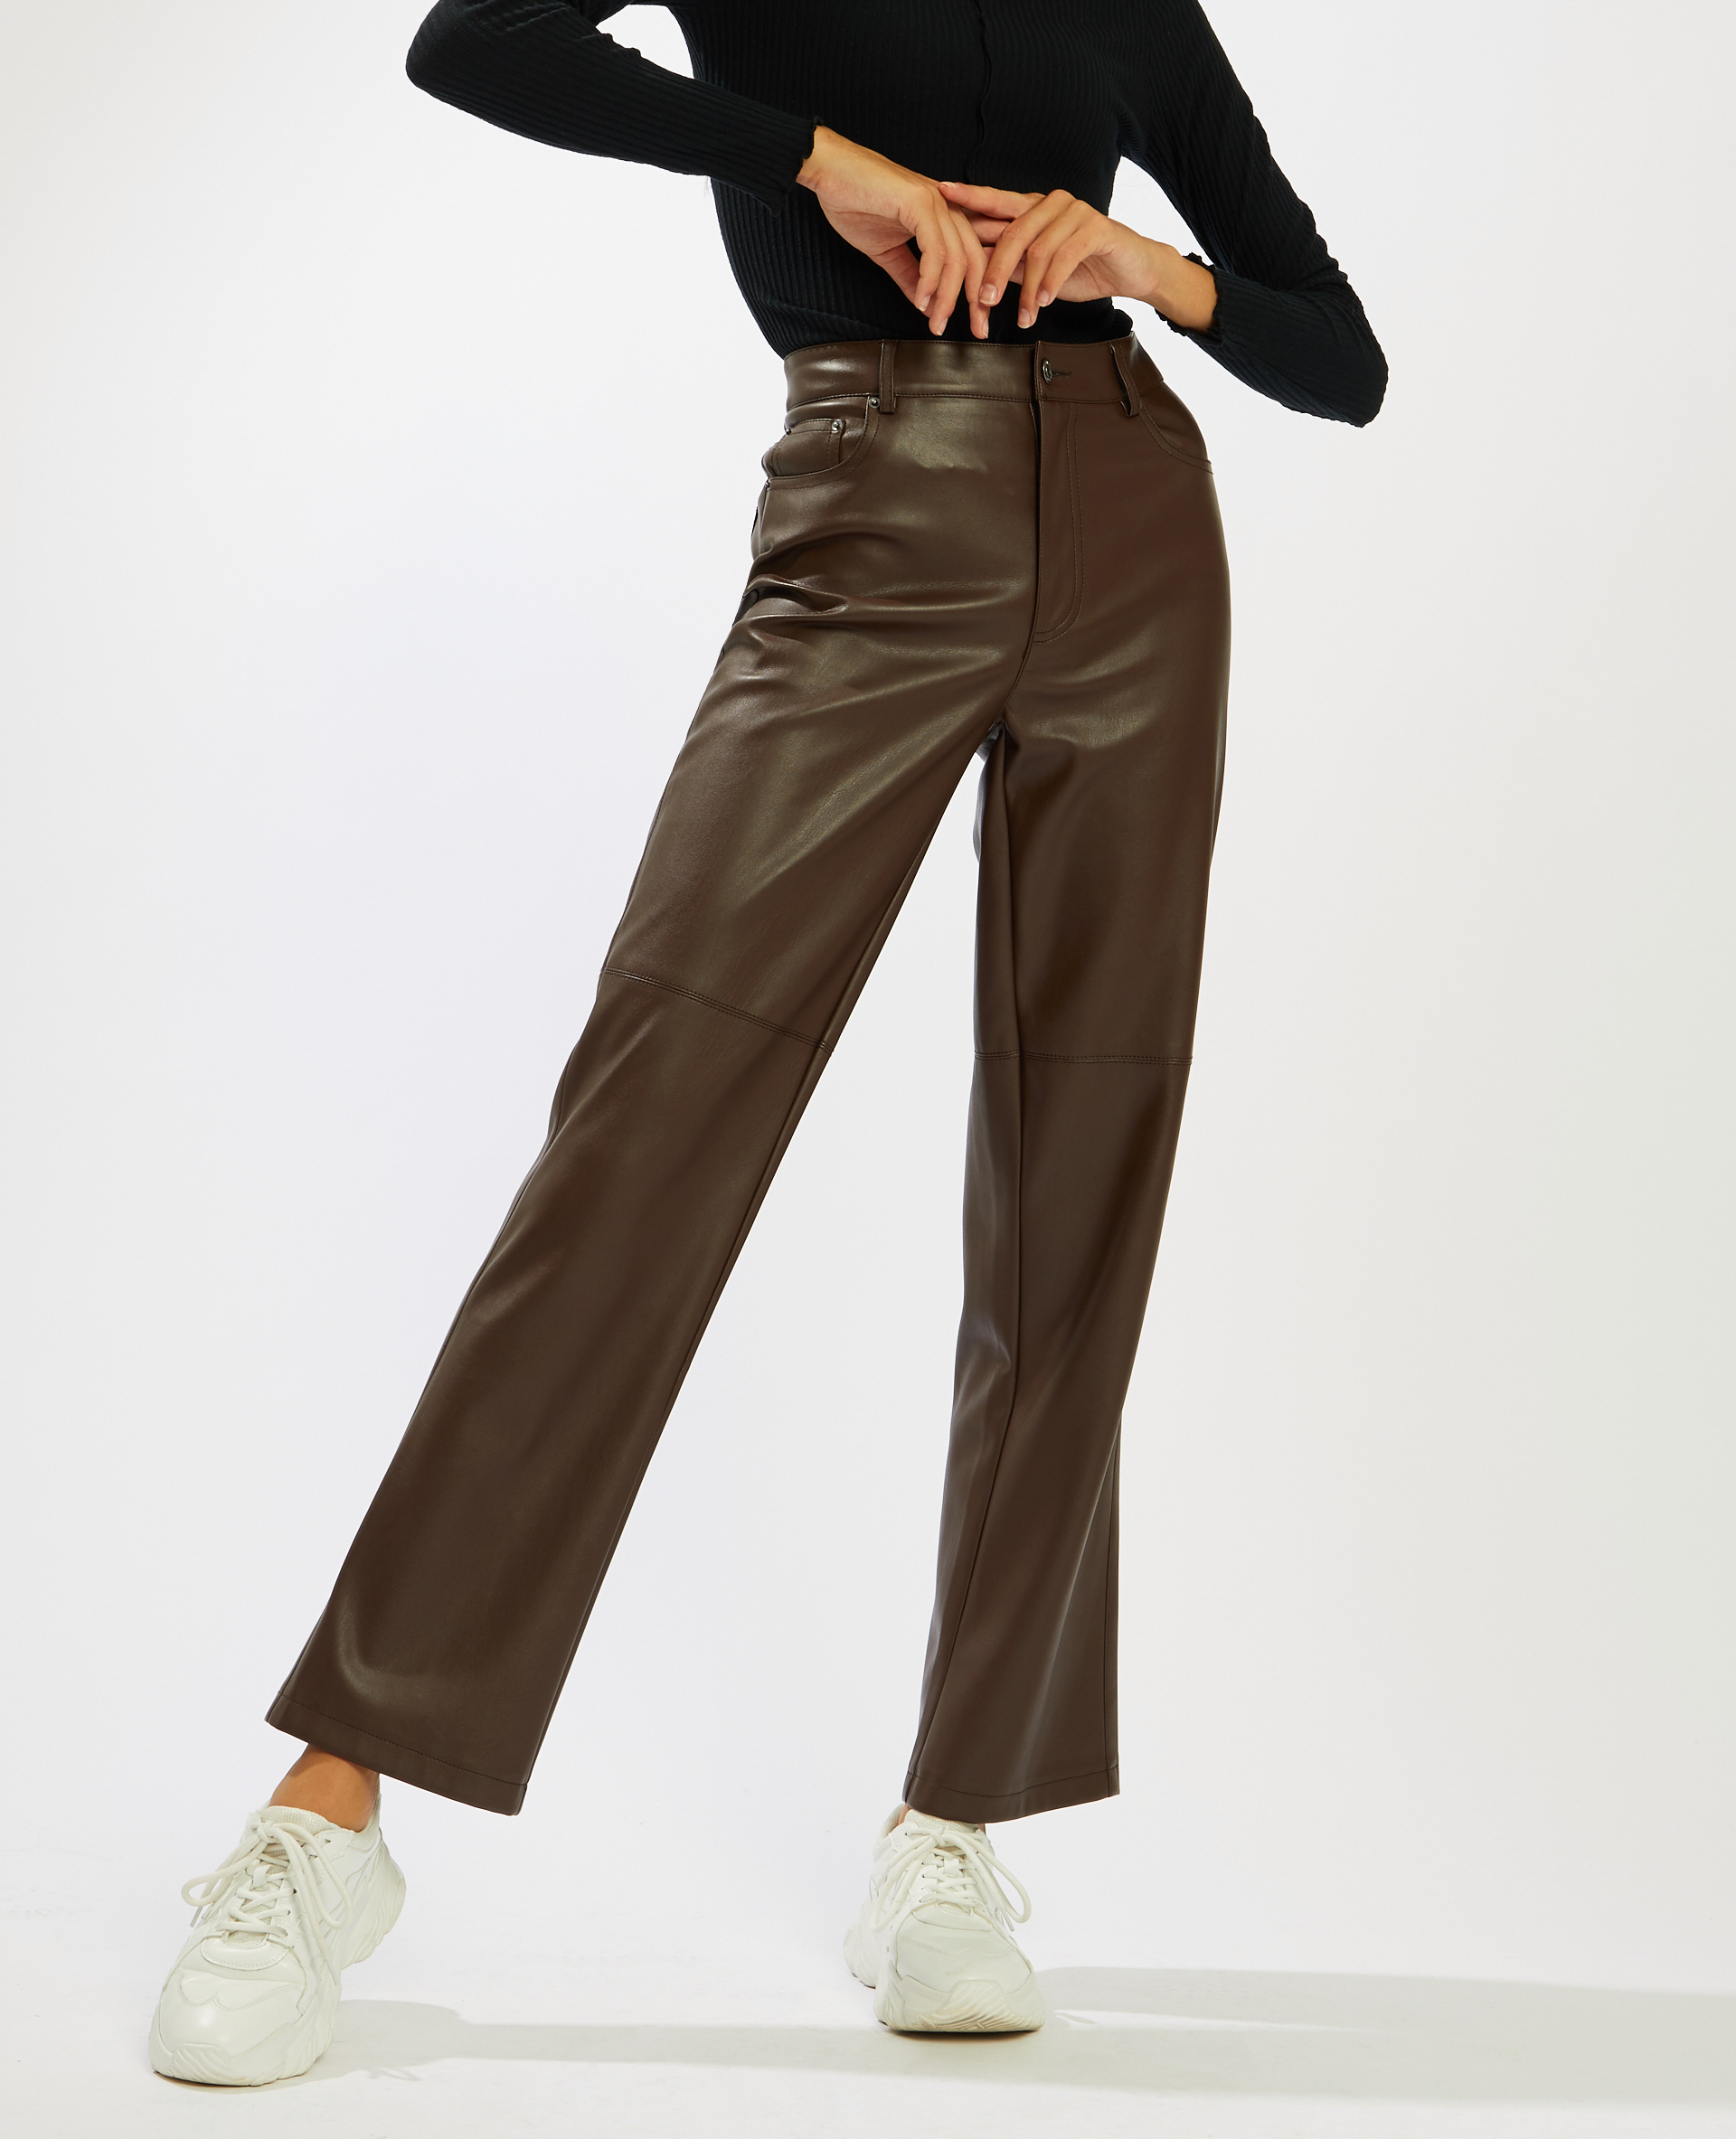 Pantalon droit simili cuir marron - Pimkie